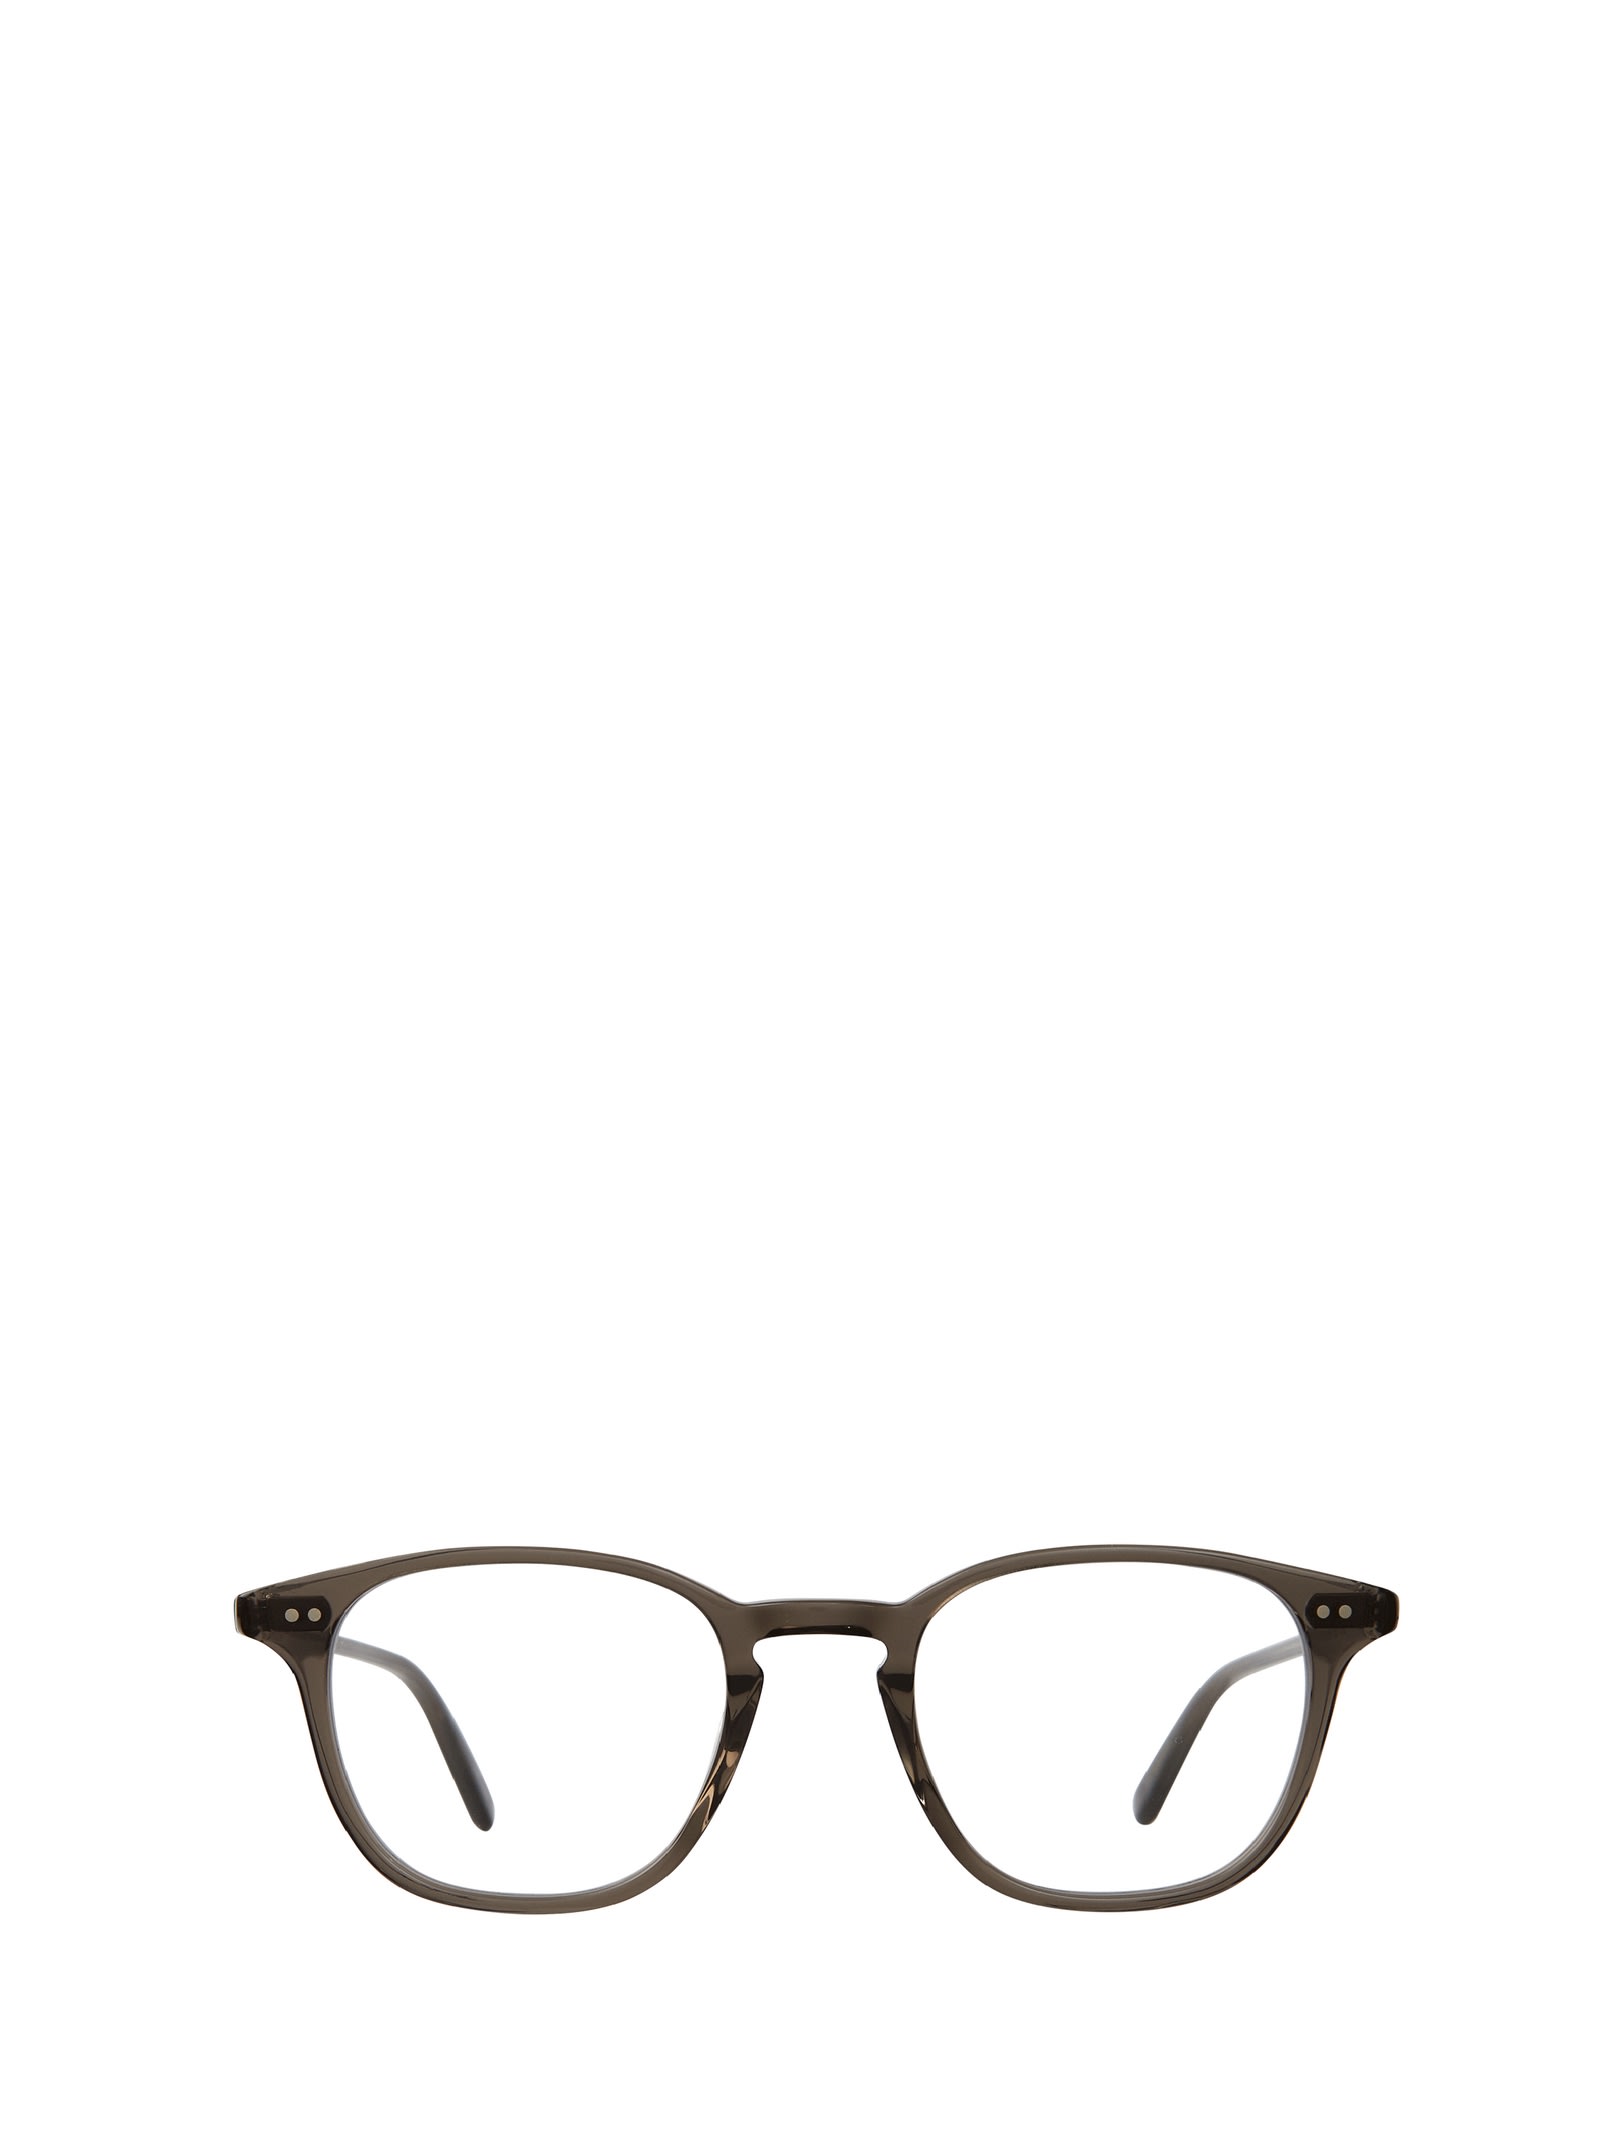 Clark Black Glass Glasses